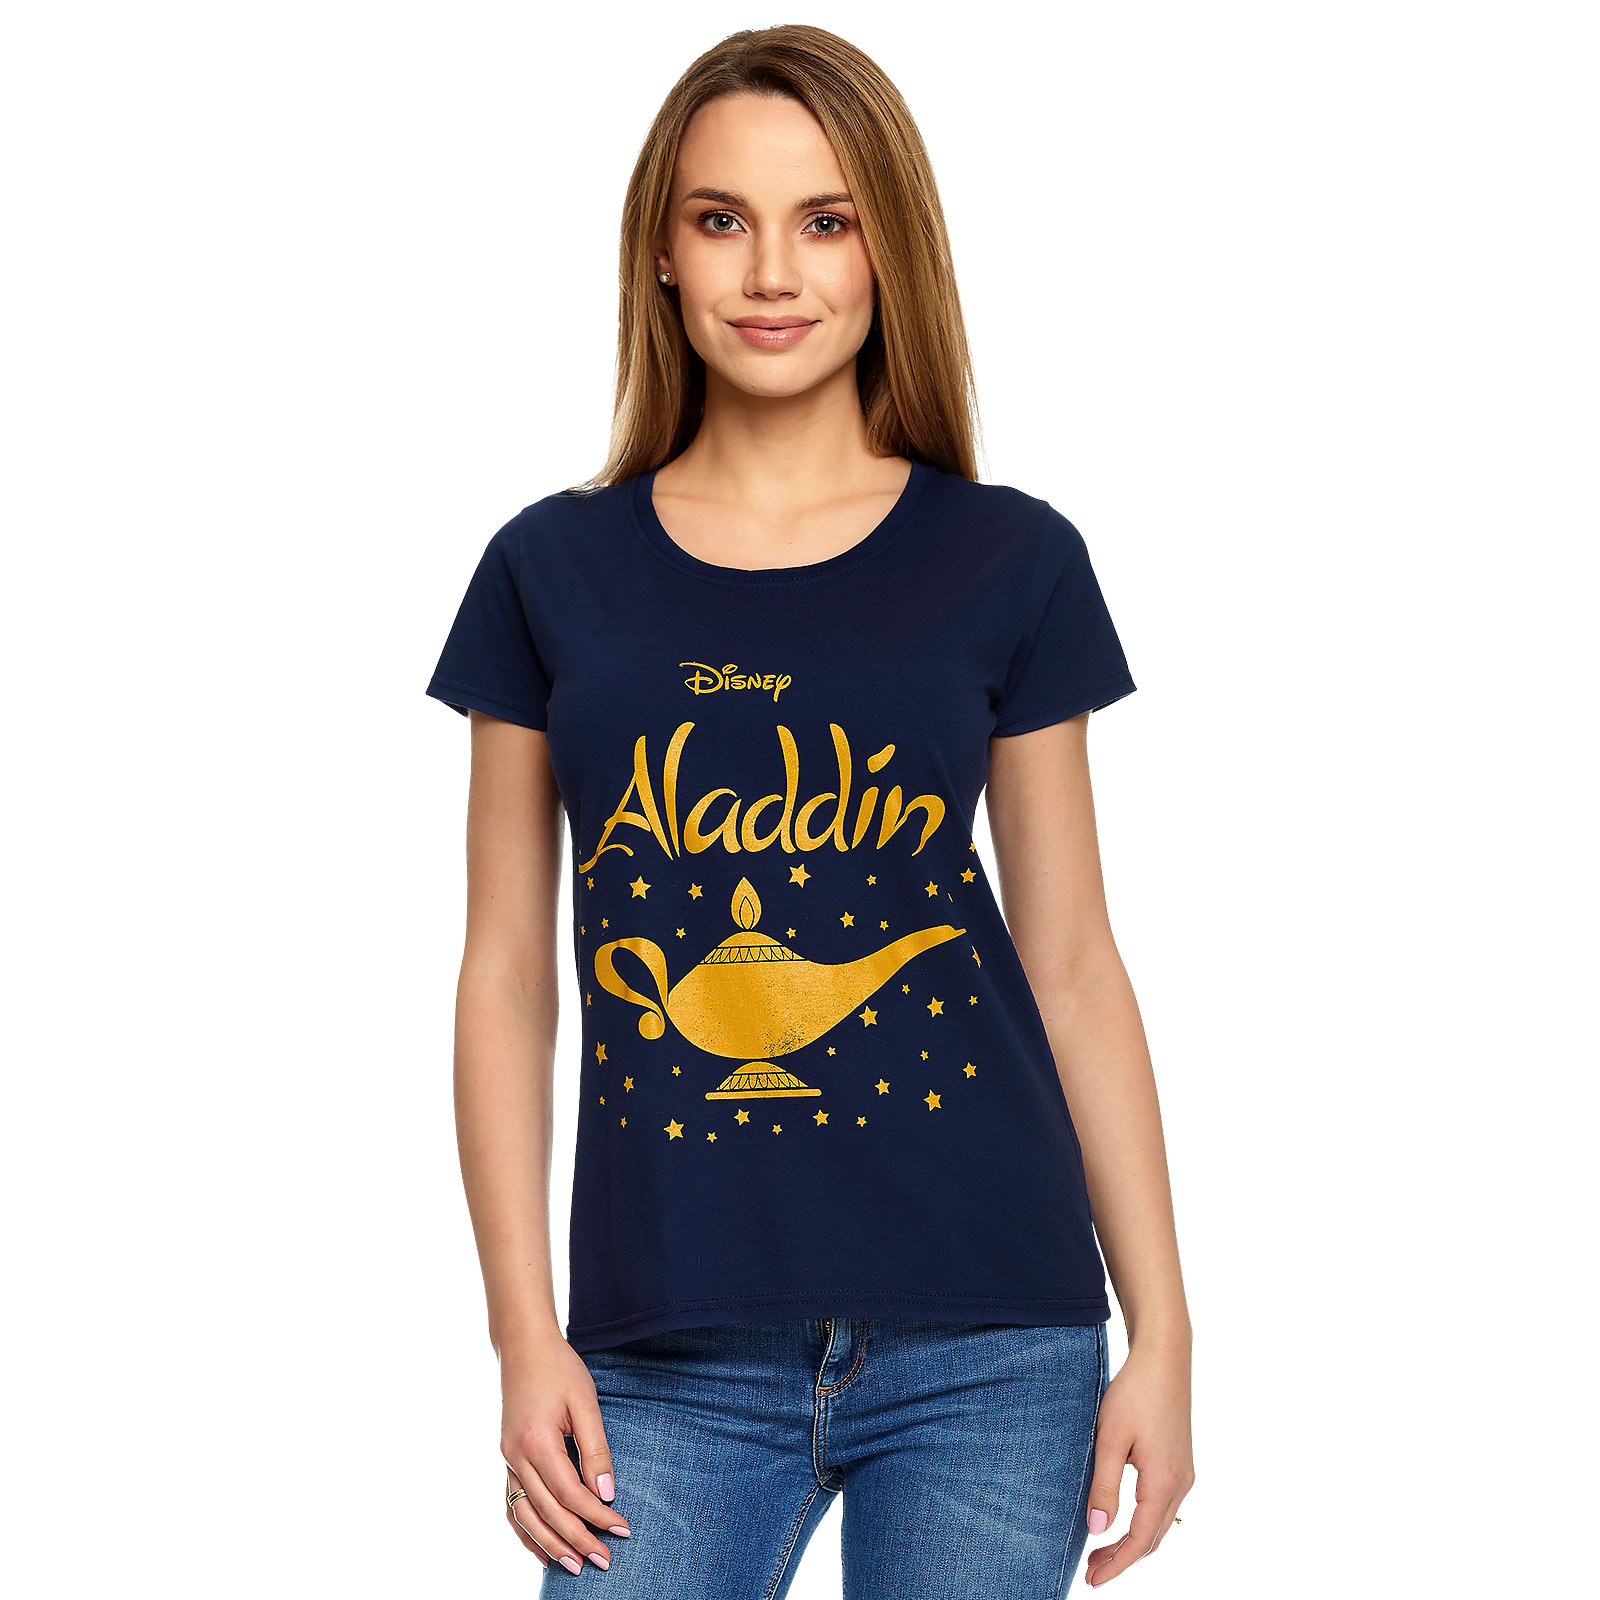 Aladdin - Wunderlampe T-Shirt Damen blau